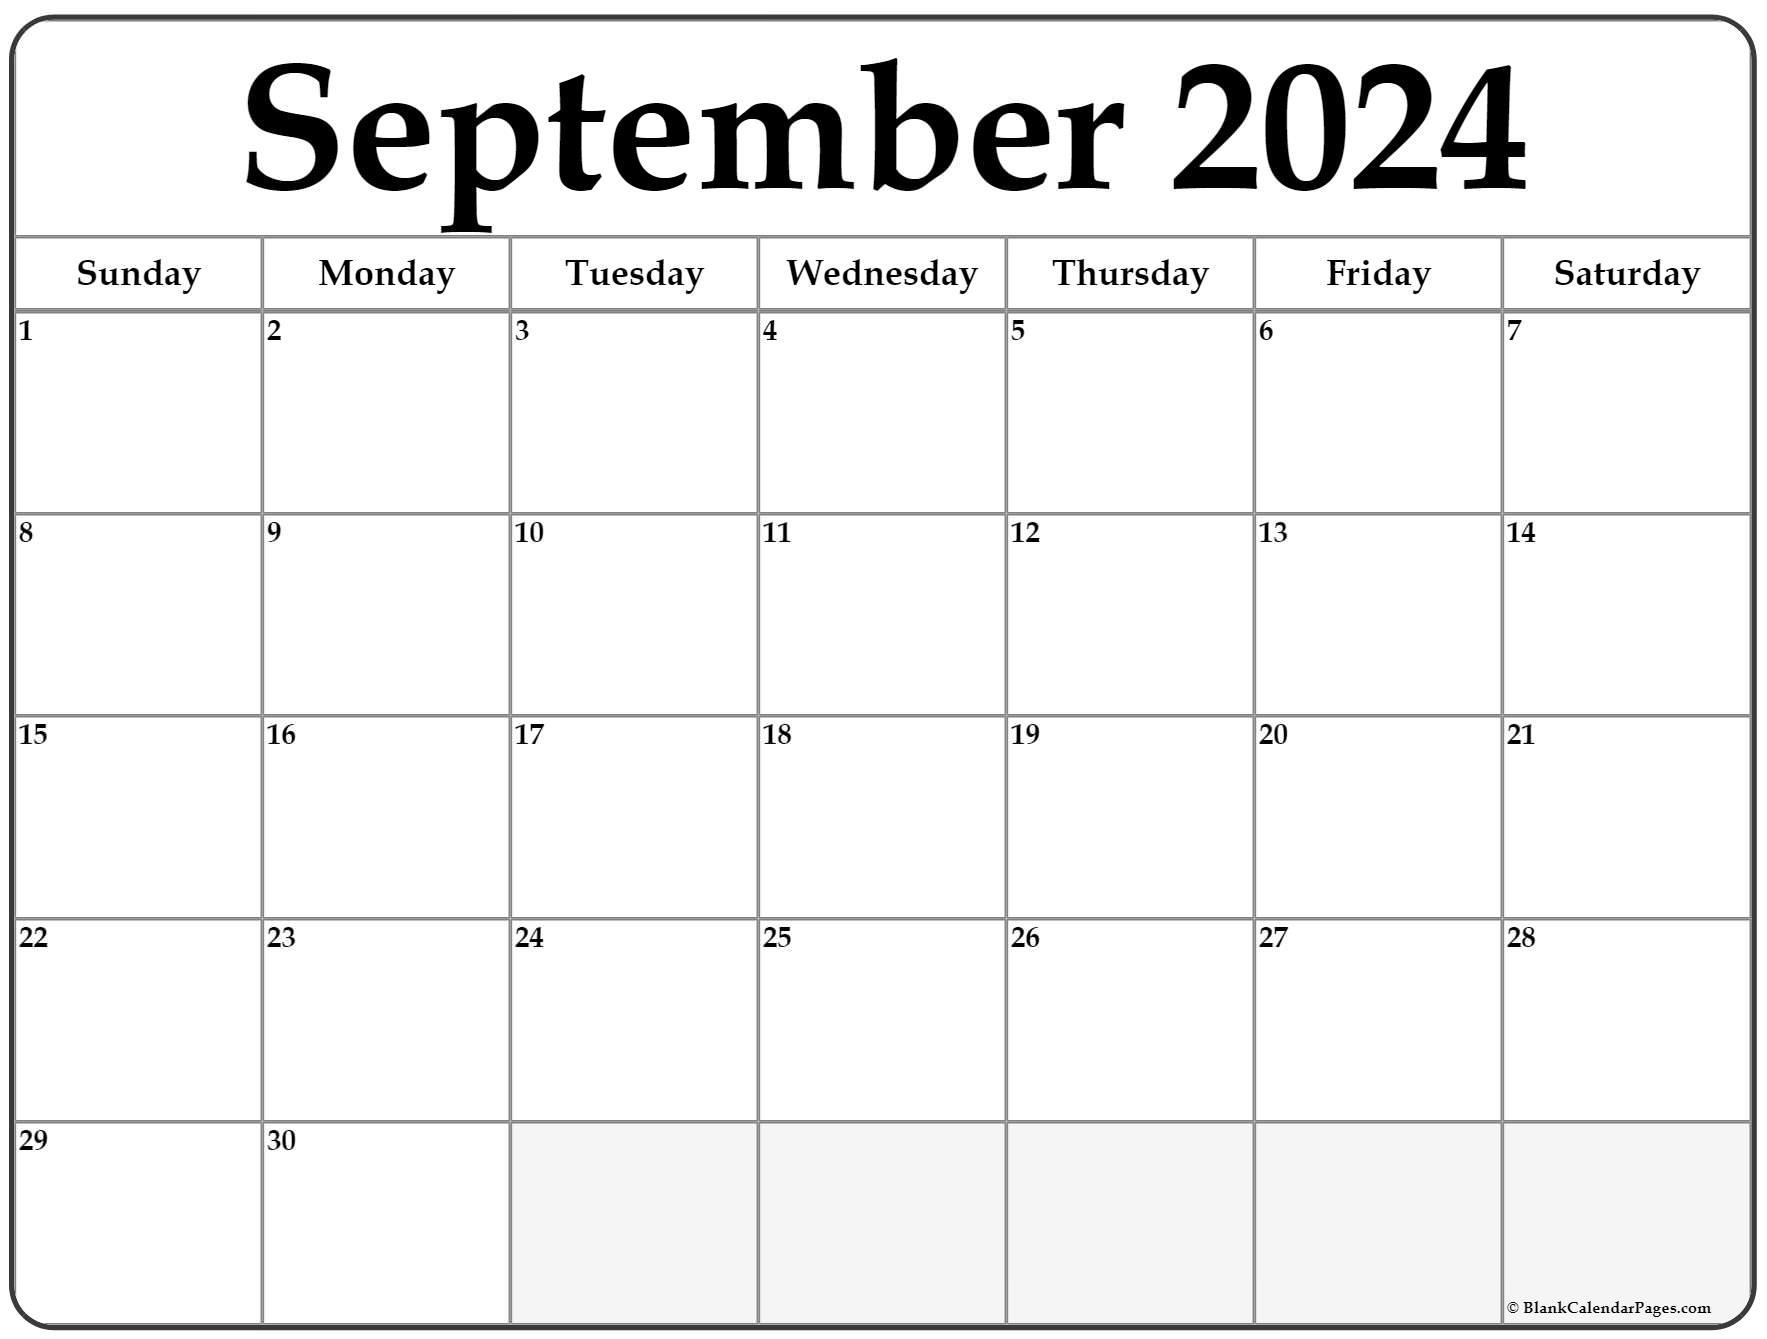 September 2022 Calendar Template September 2022 Calendar | Free Printable Calendar Templates